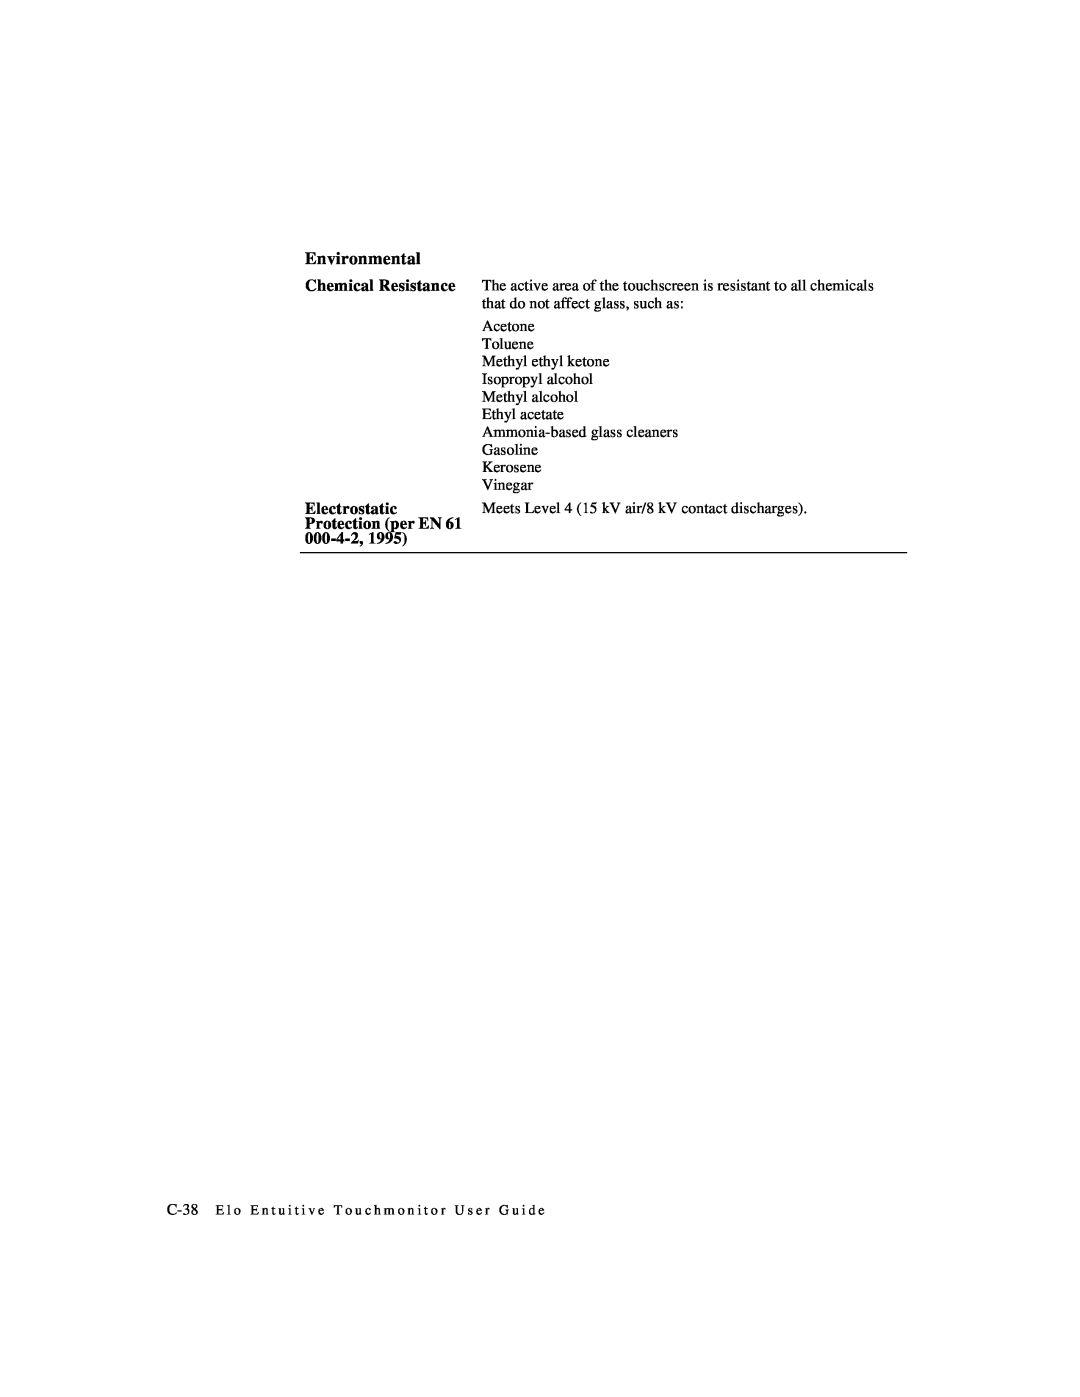 Elo TouchSystems 1525L manual Environmental, Chemical Resistance, Electrostatic, Protection per EN, 000-4-2 